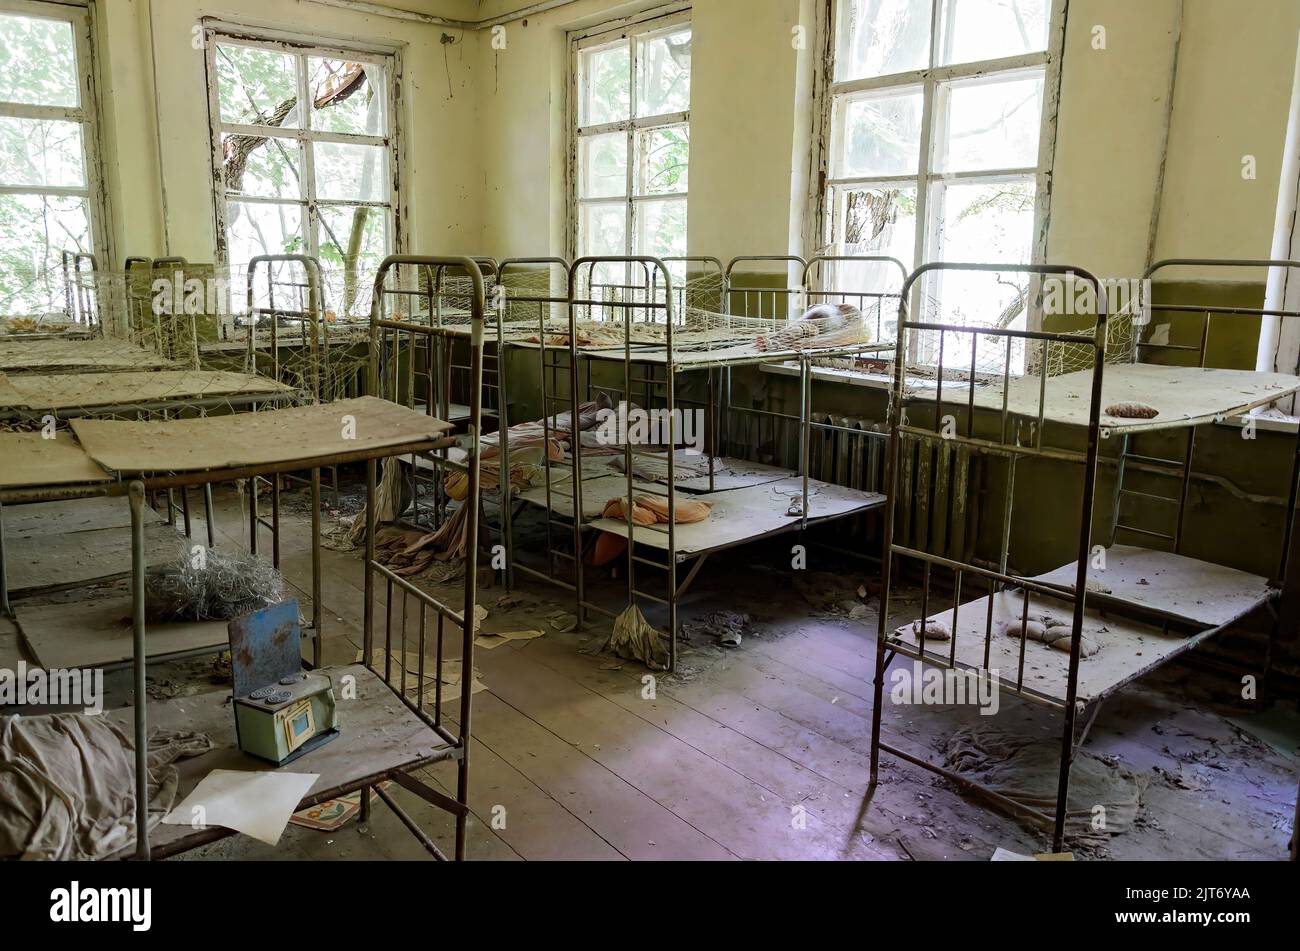 Children dormitory in Prypiat school, Chernobyl exclusion zone, Ukraine Stock Photo